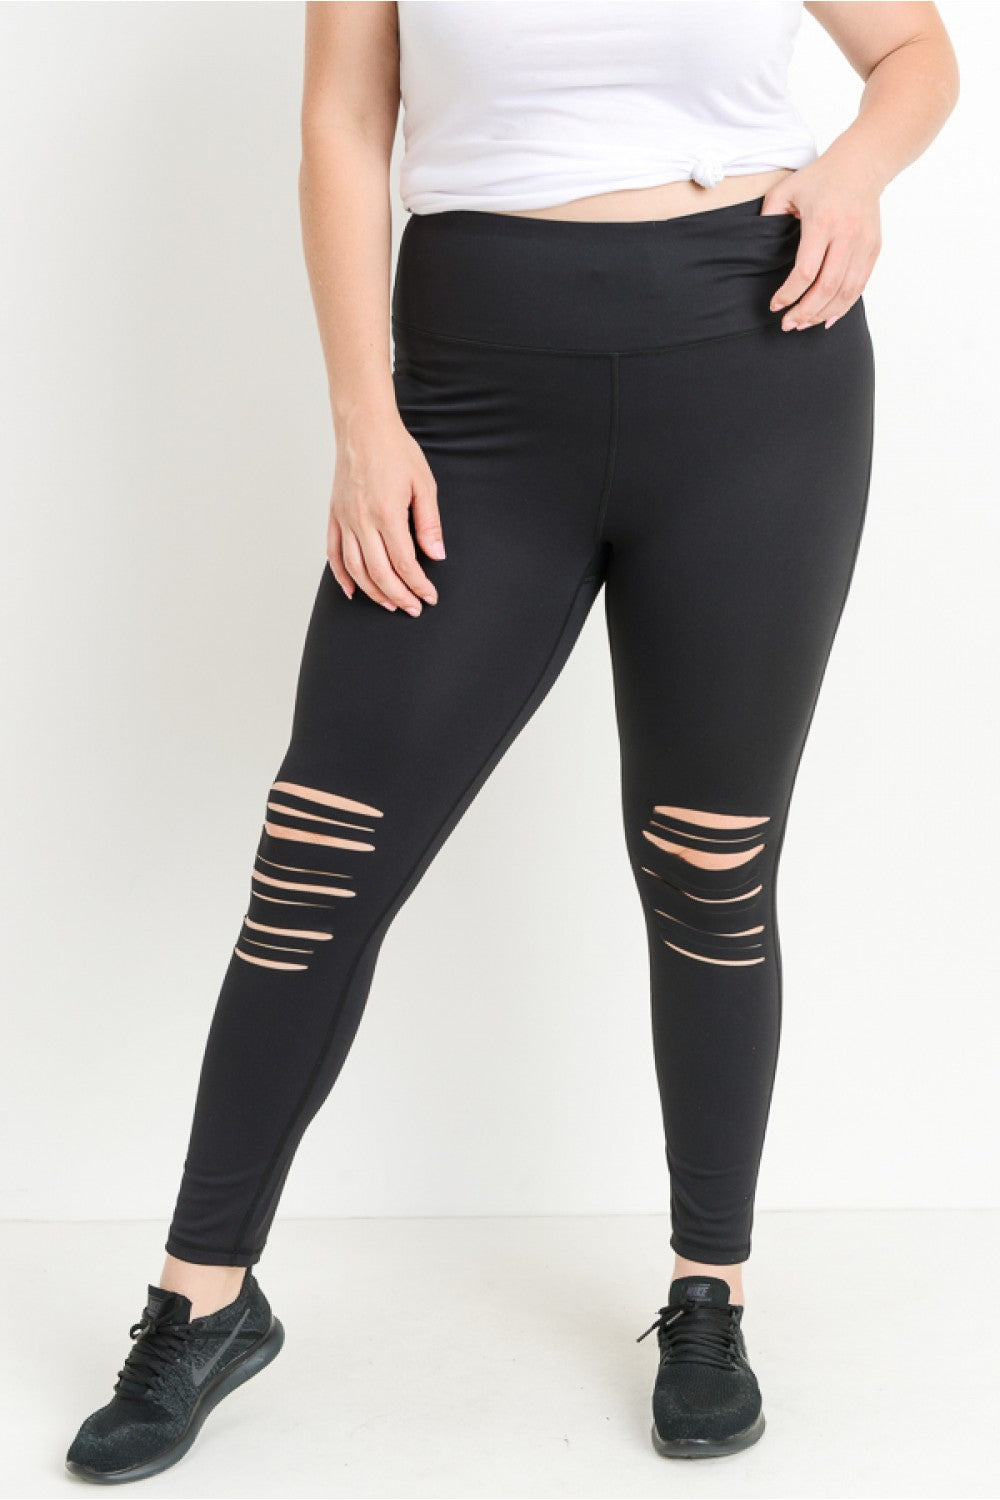 open Knee Lace leggings – Sassy Sapphire Boutique